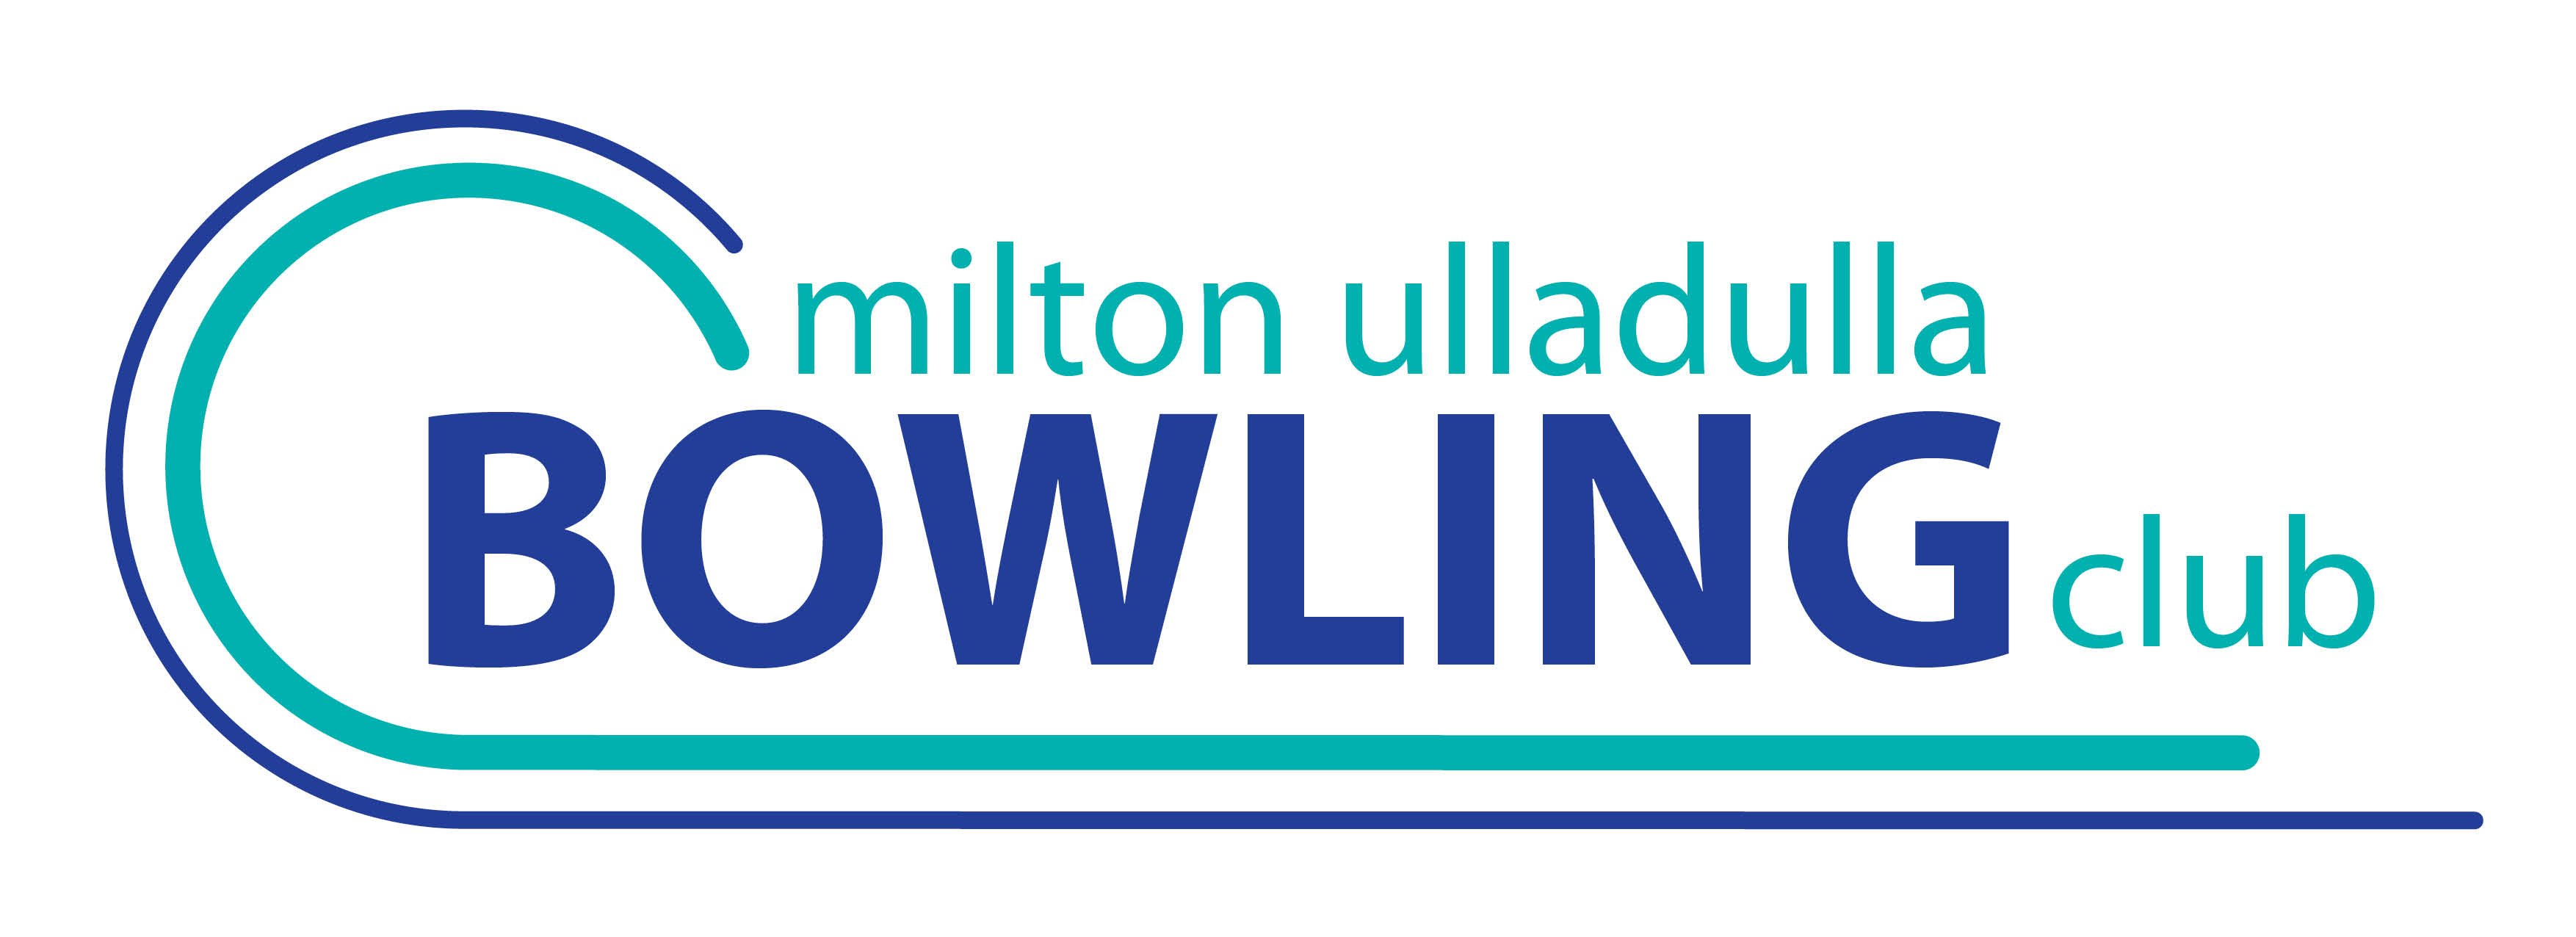 Milton Ulladulla Bowling Club